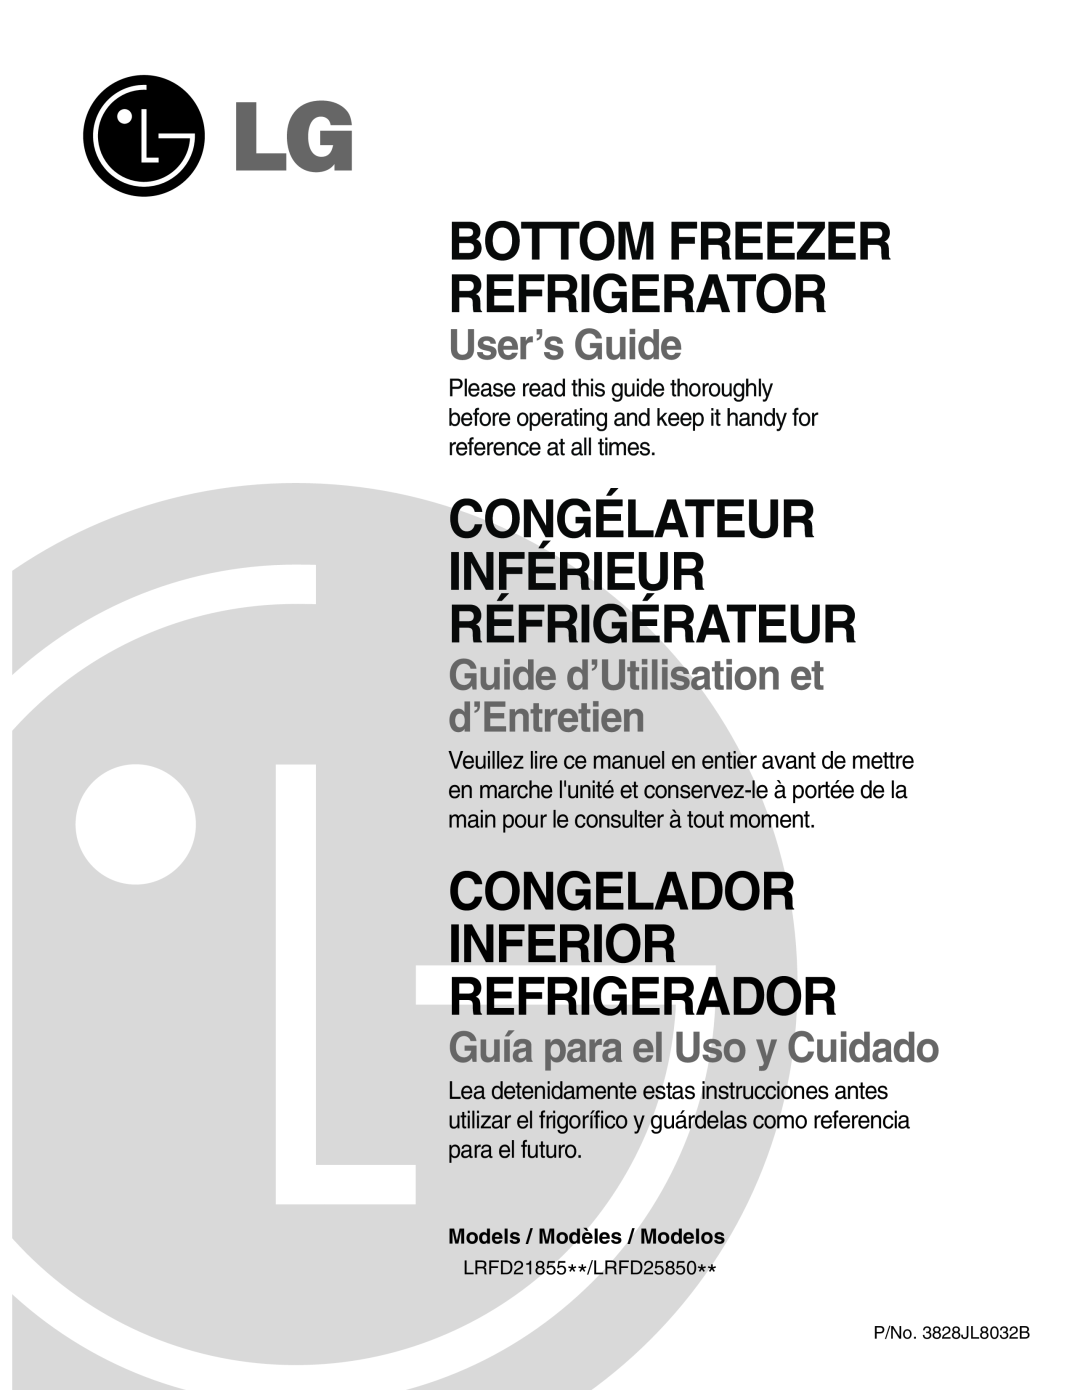 LG Electronics LRFD21855, LRFD25850 manual Congélateur Inférieur Réfrigérateur, Bottom Freezer Refrigerator, User’s Guide 